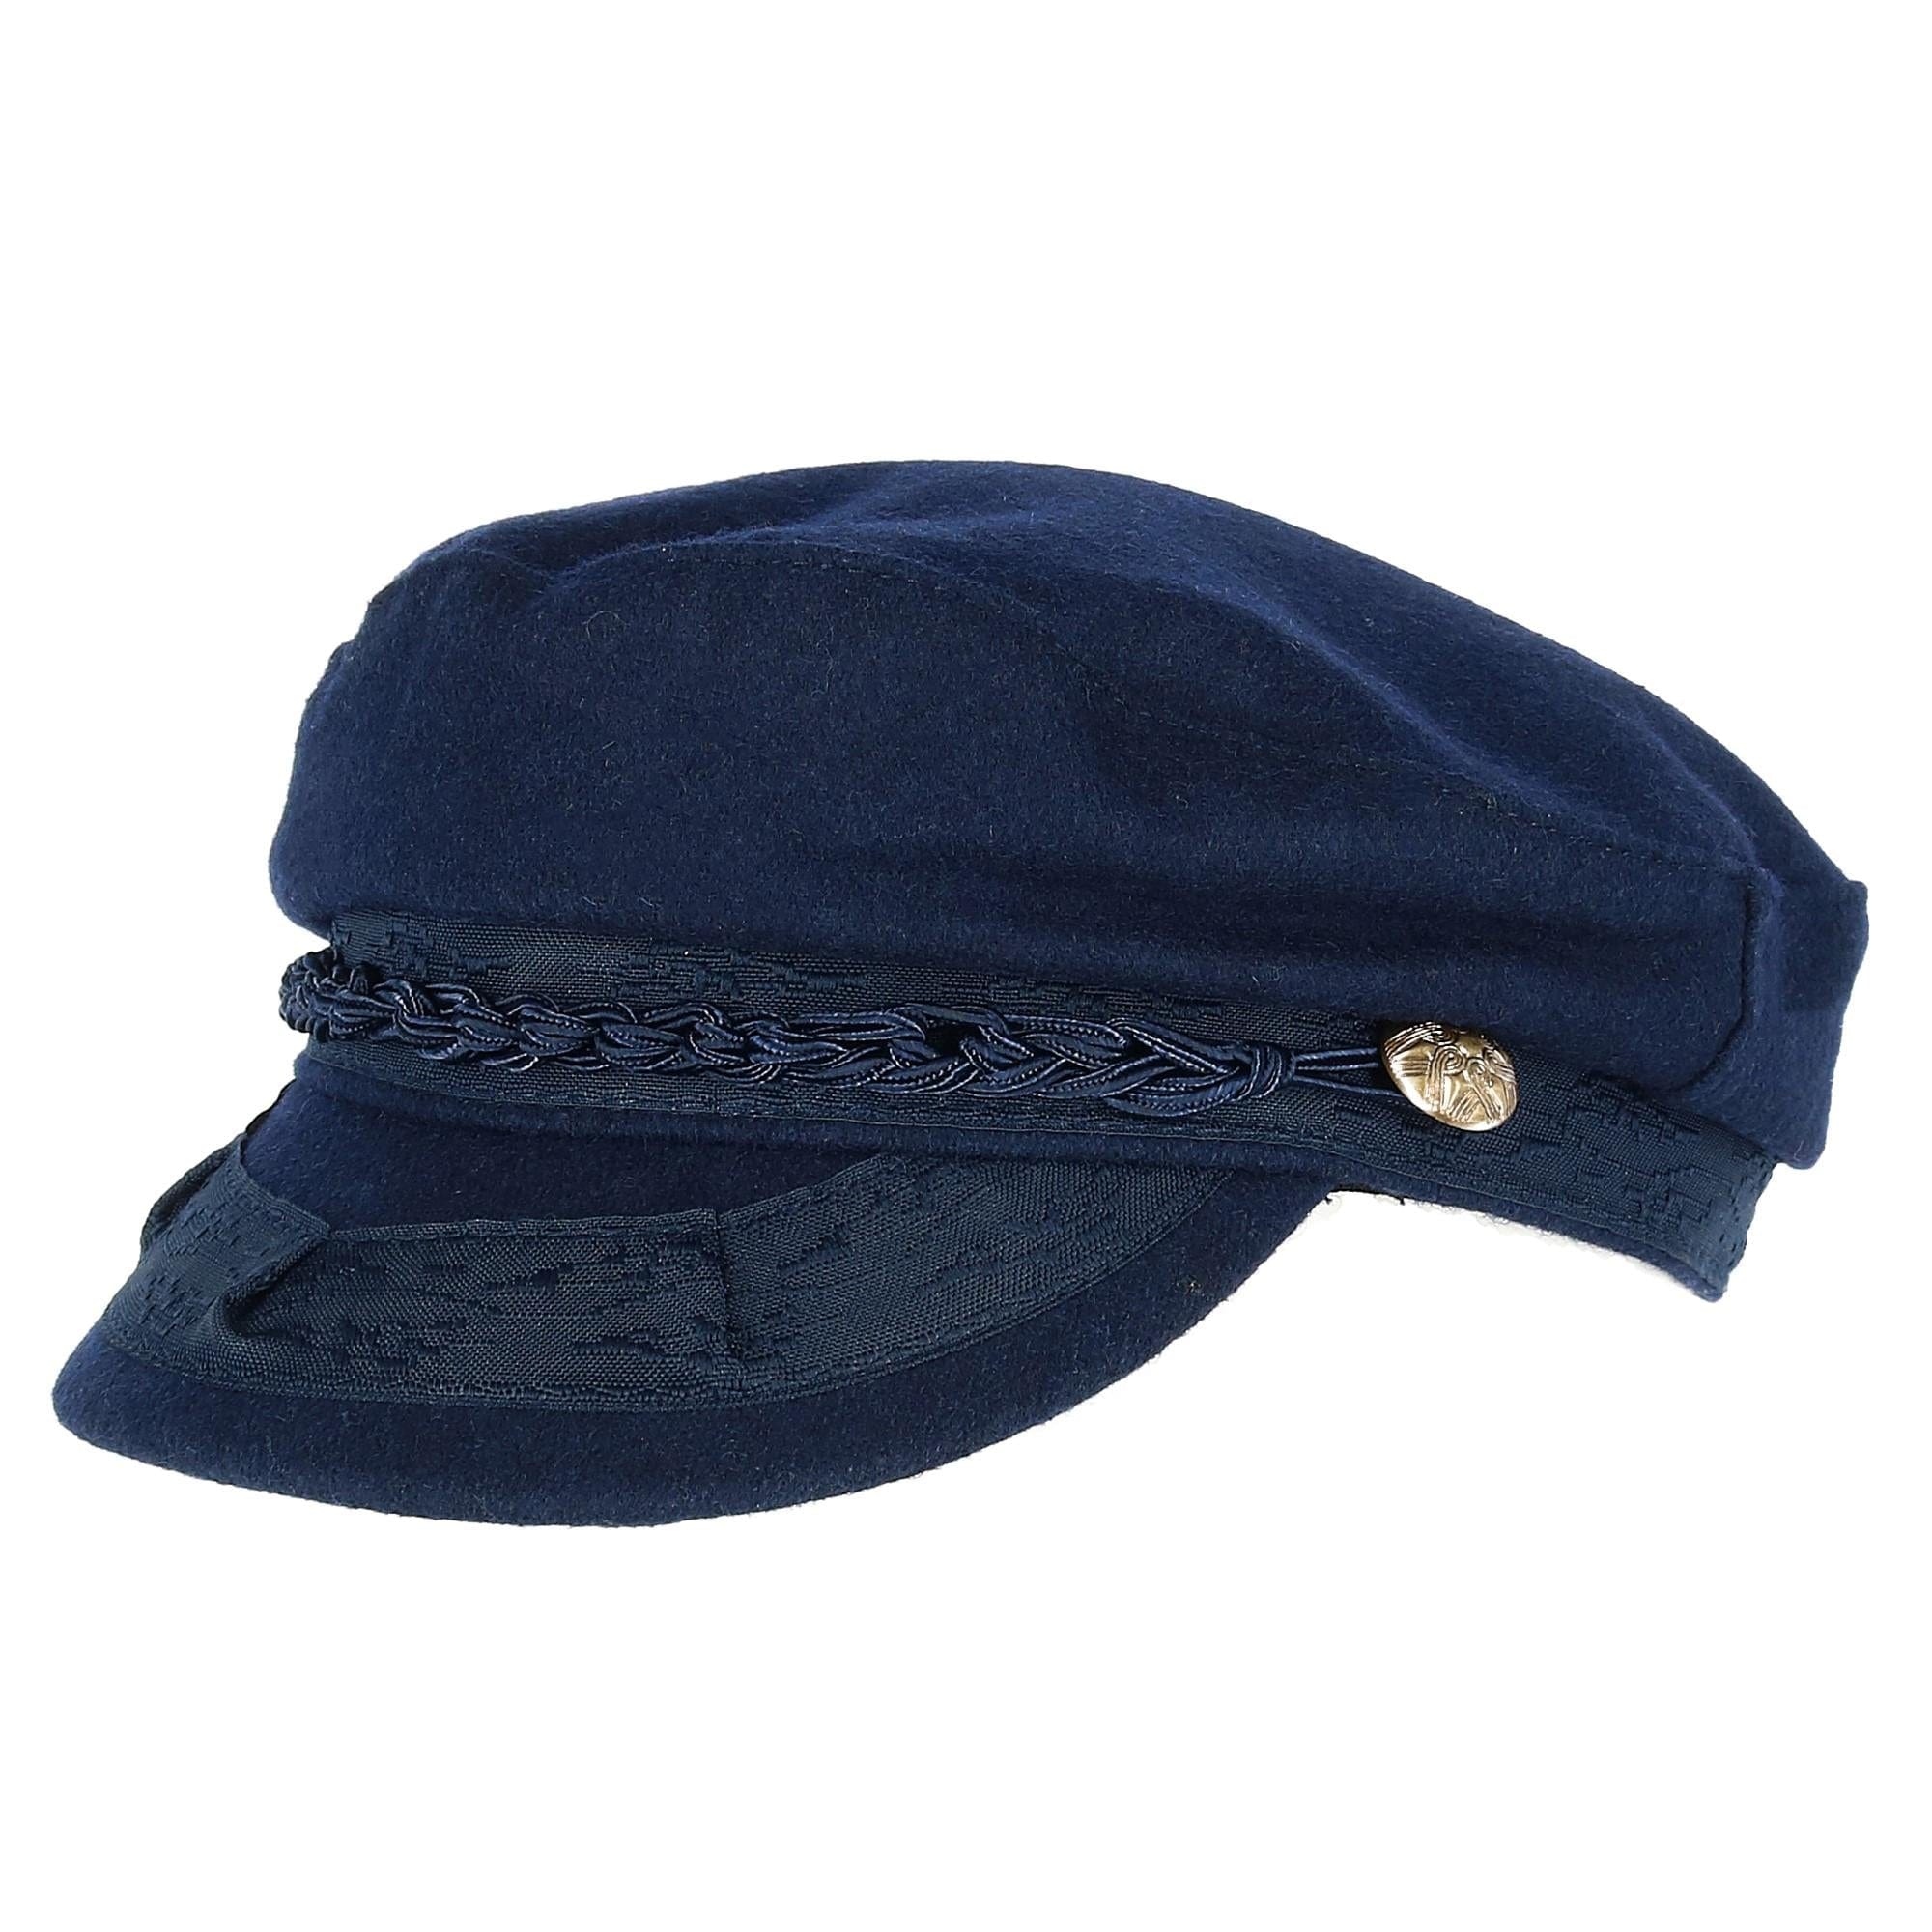 Men's Aegean Captain's Wool Cap: Size: 7 1/2 Black